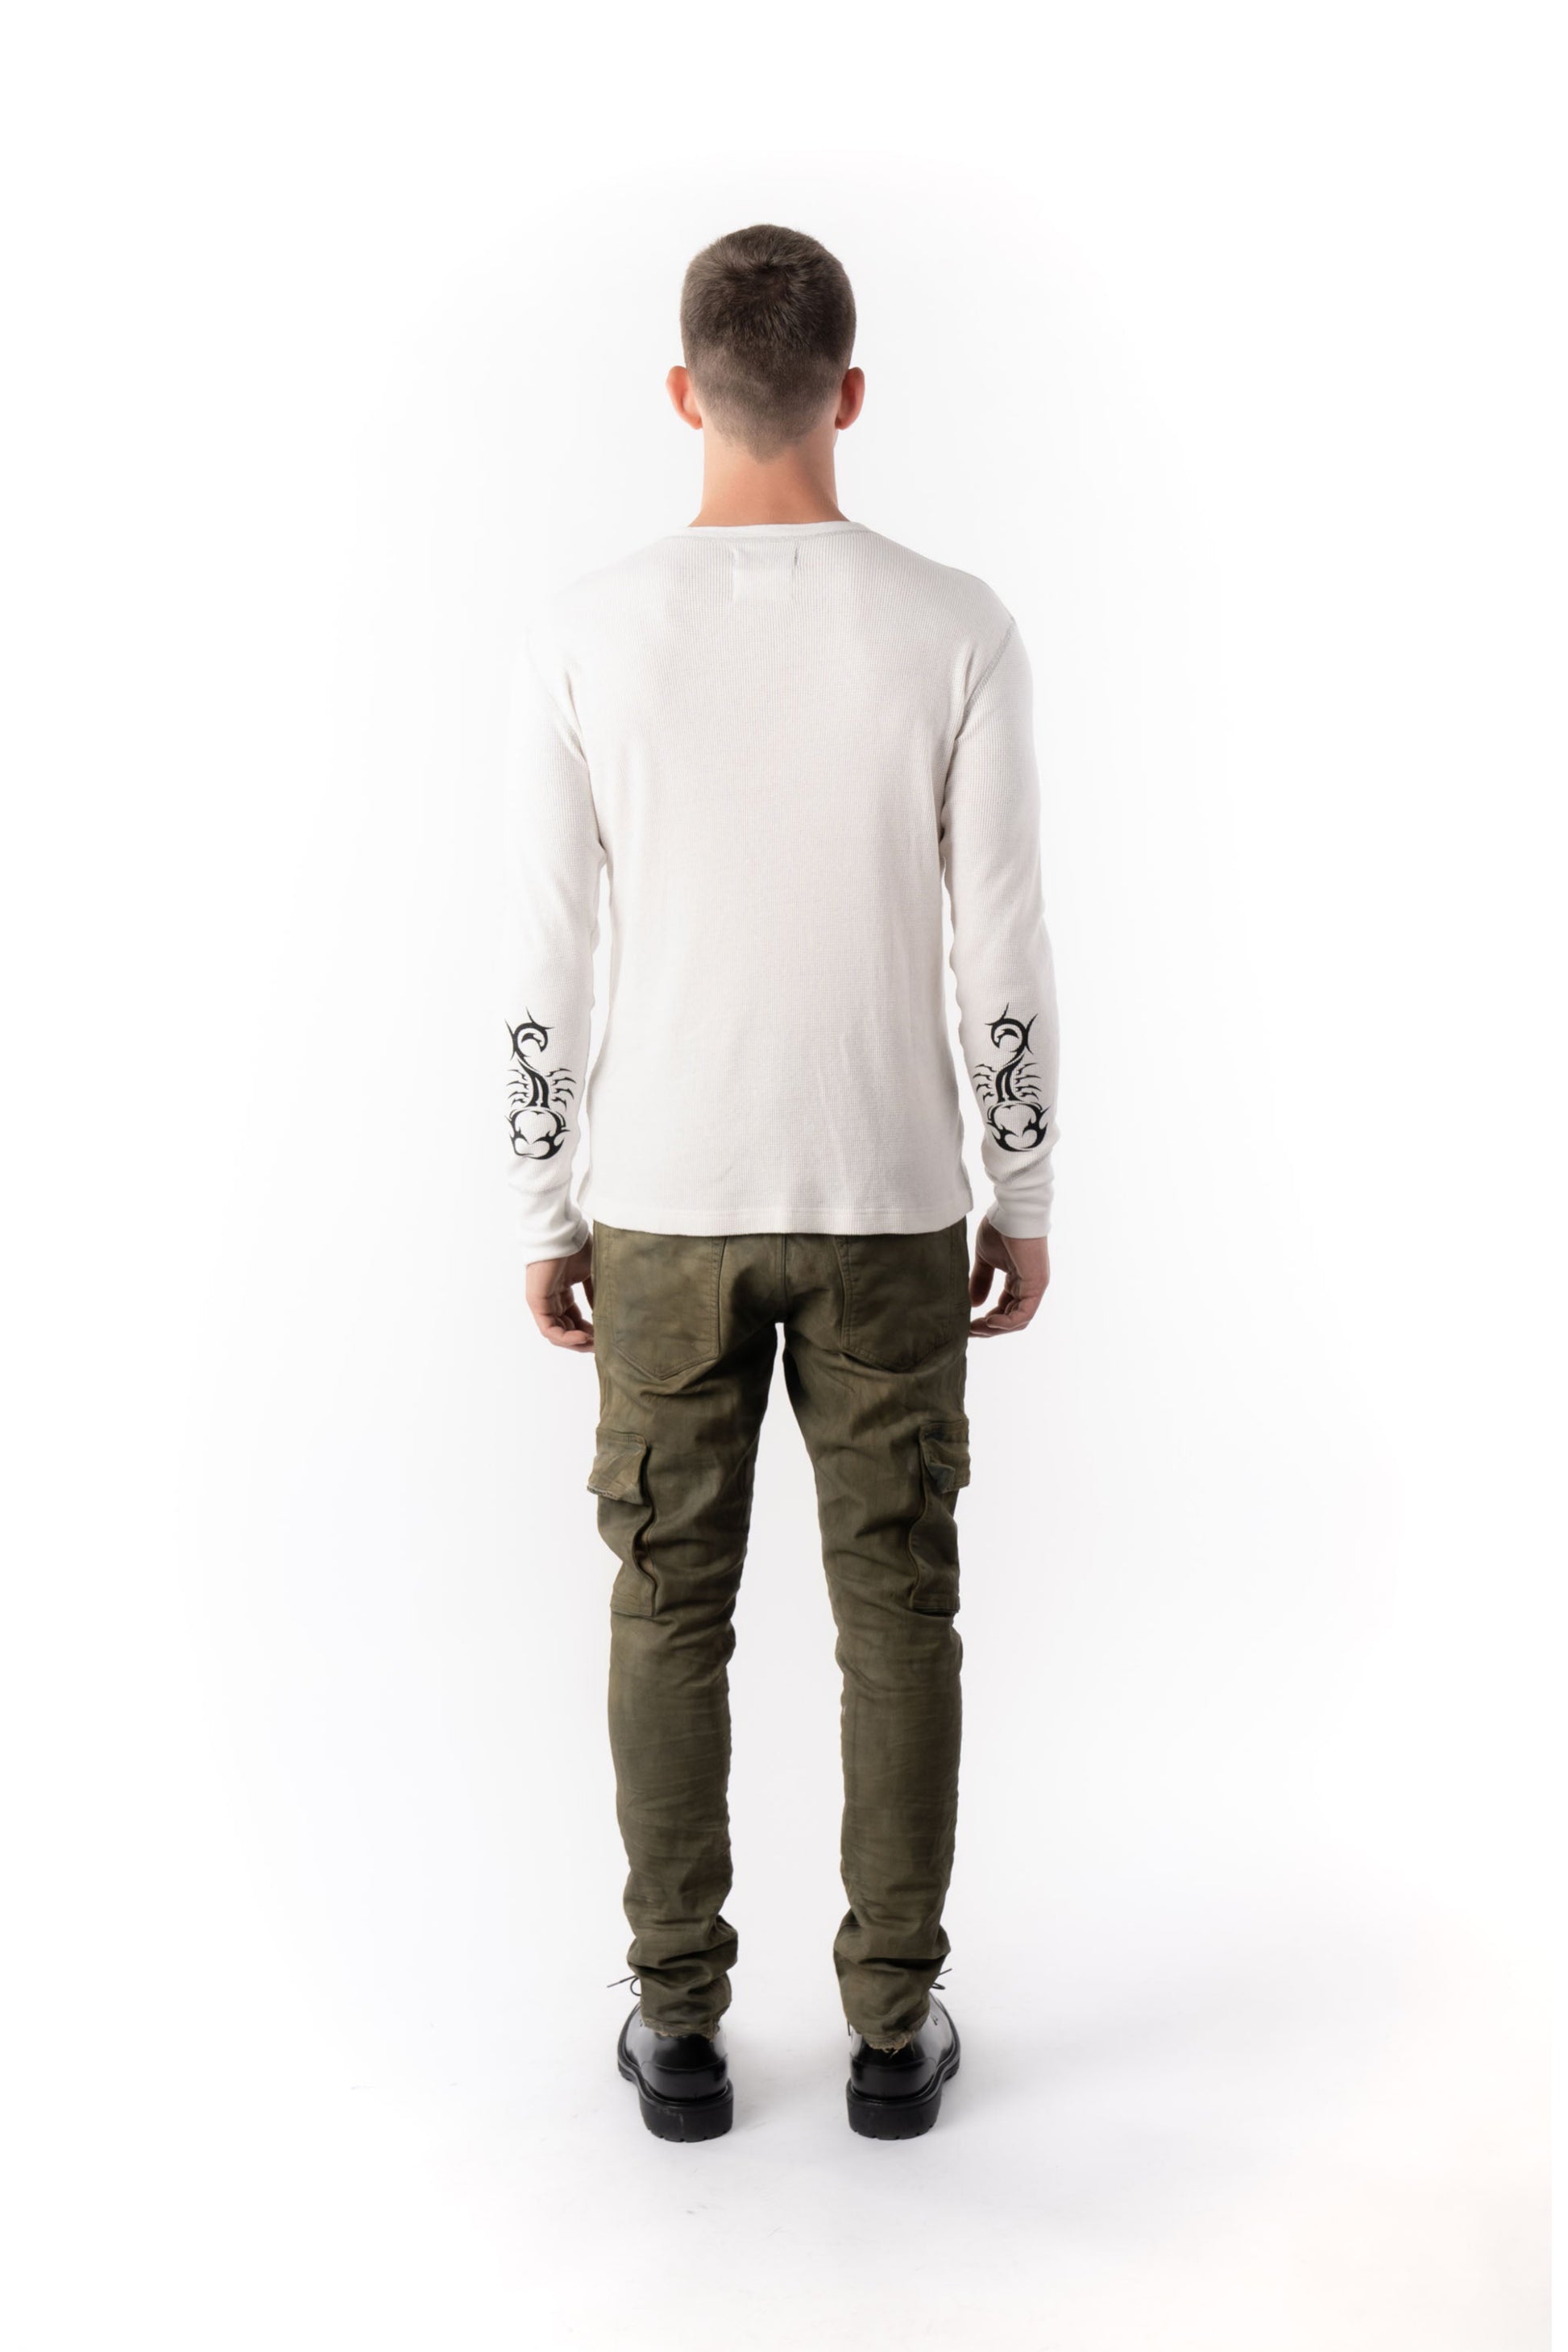 PURPLE BRAND - Long Sleeve Reflective Stitch Crew Shirt - Style No. P202 - Off White Scorpion - Model Back Pose